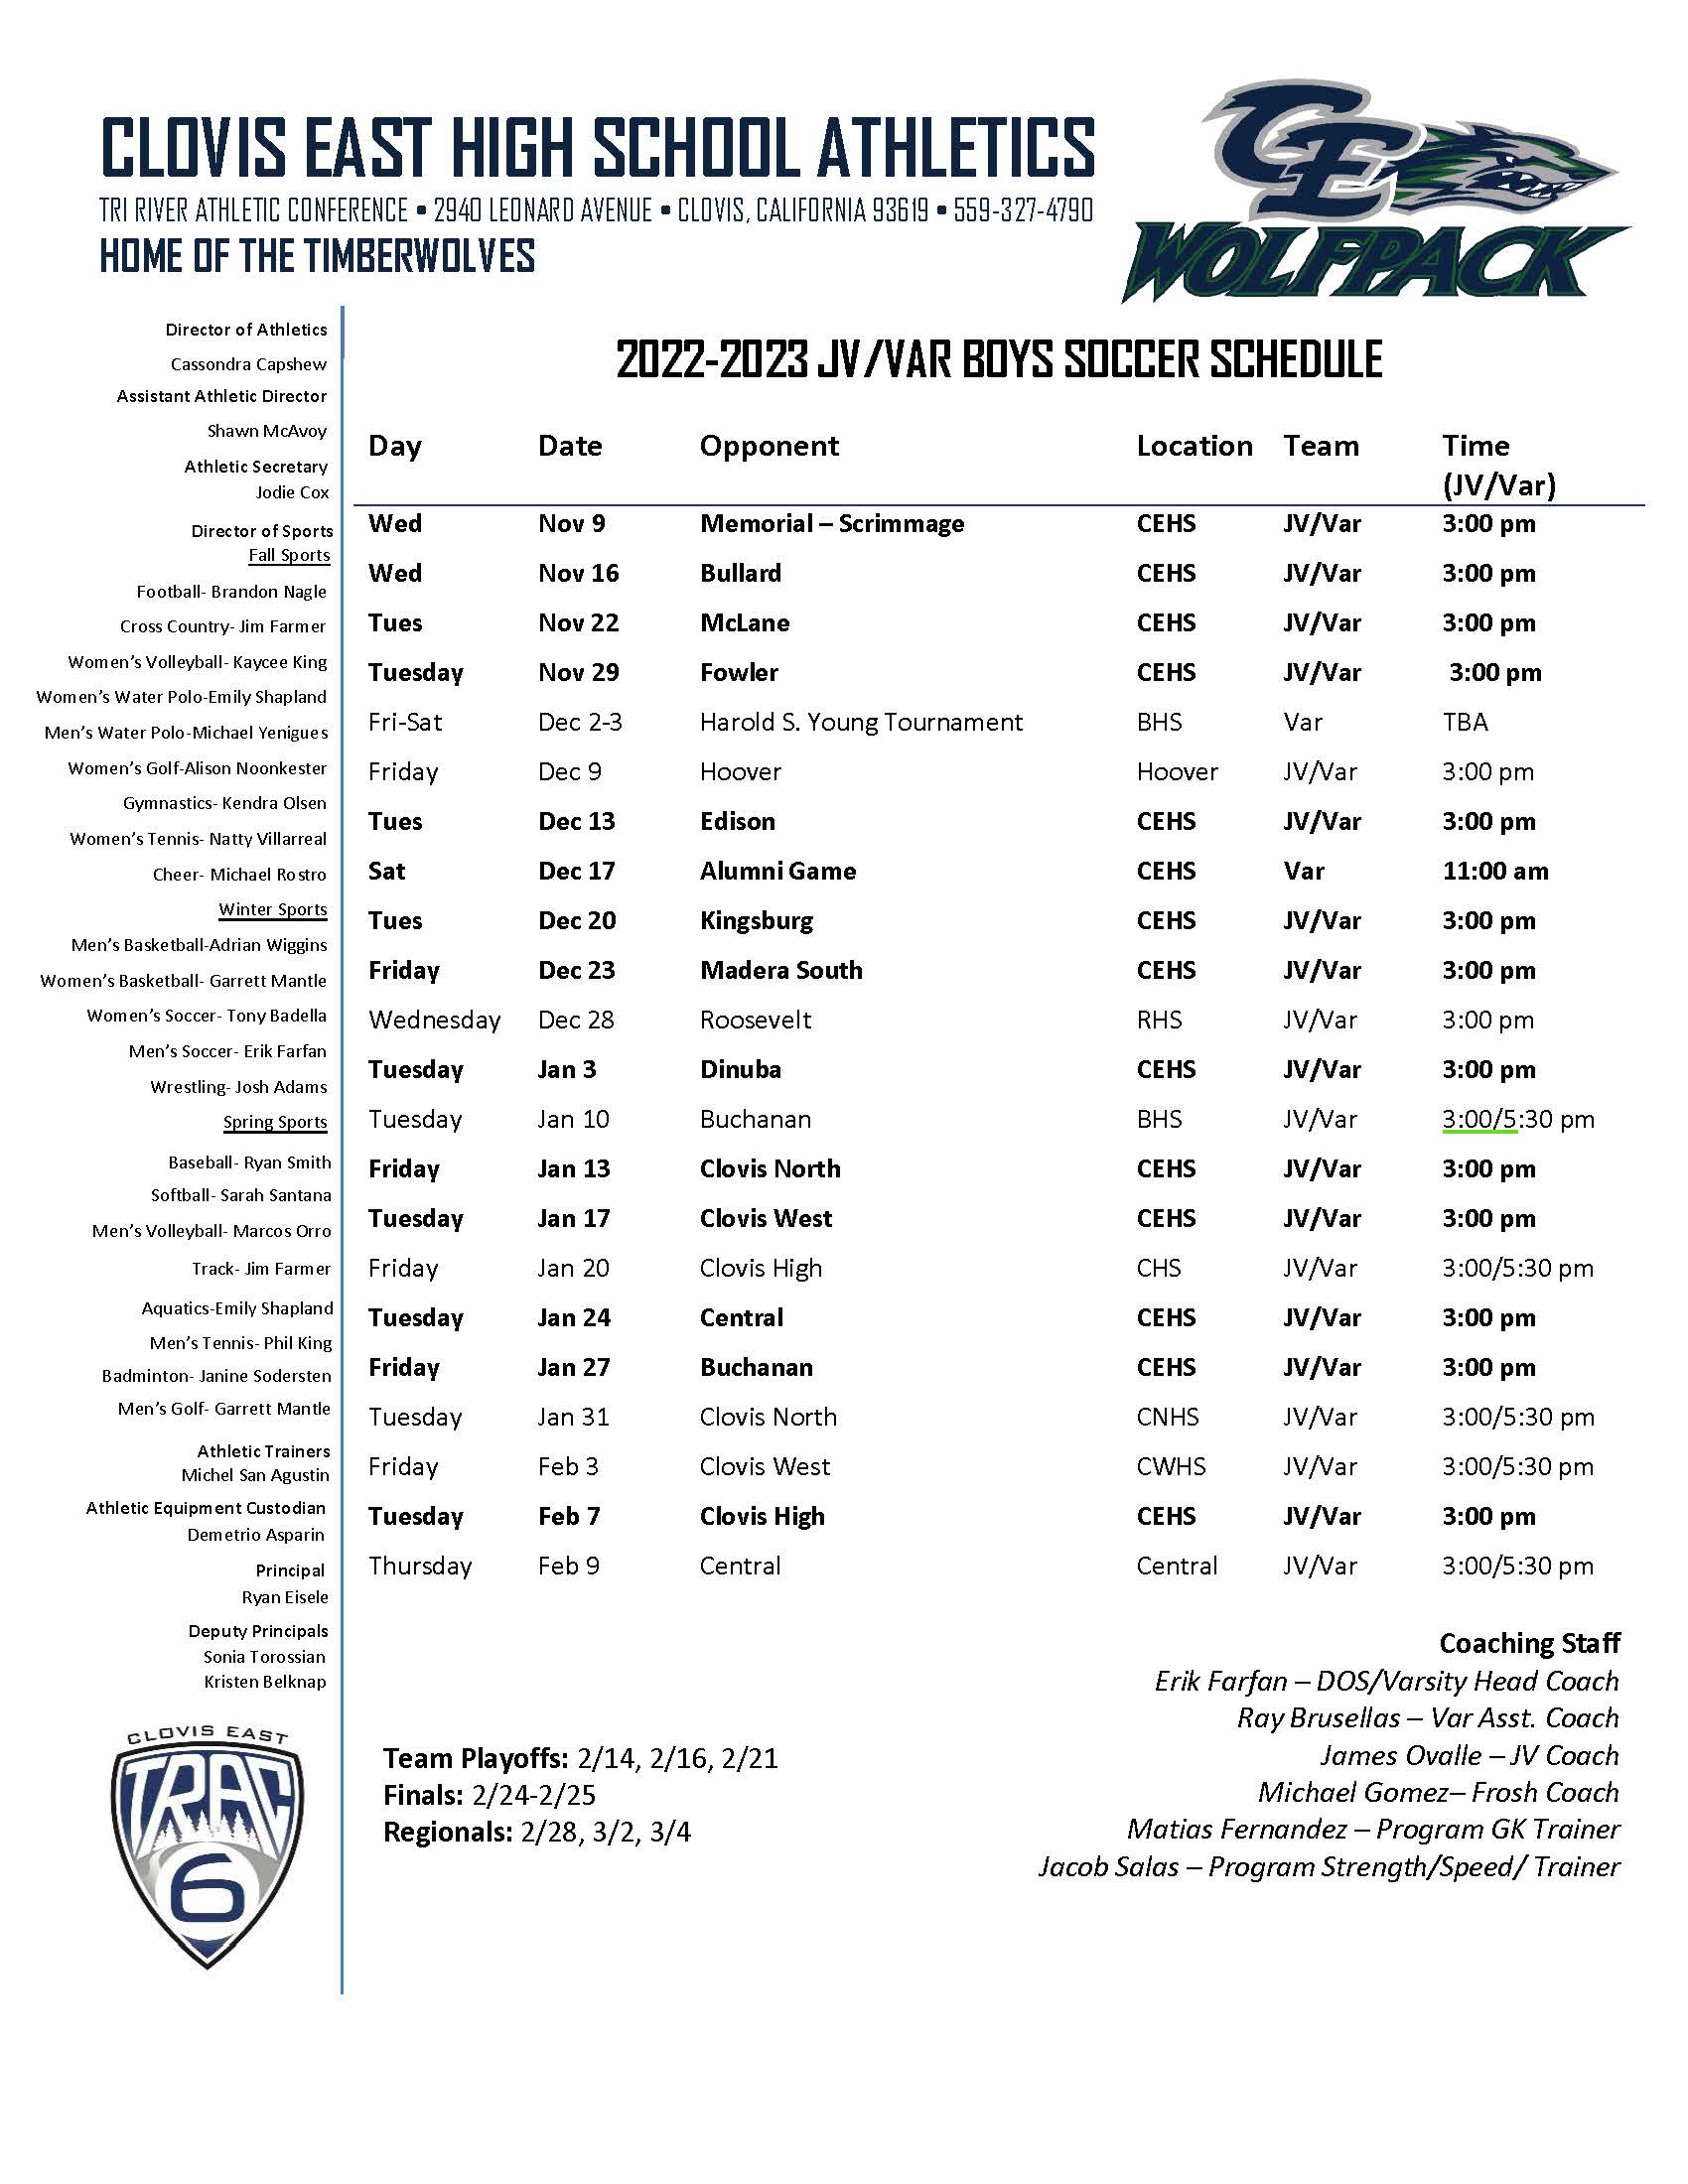 22-23 boys soccer schedule